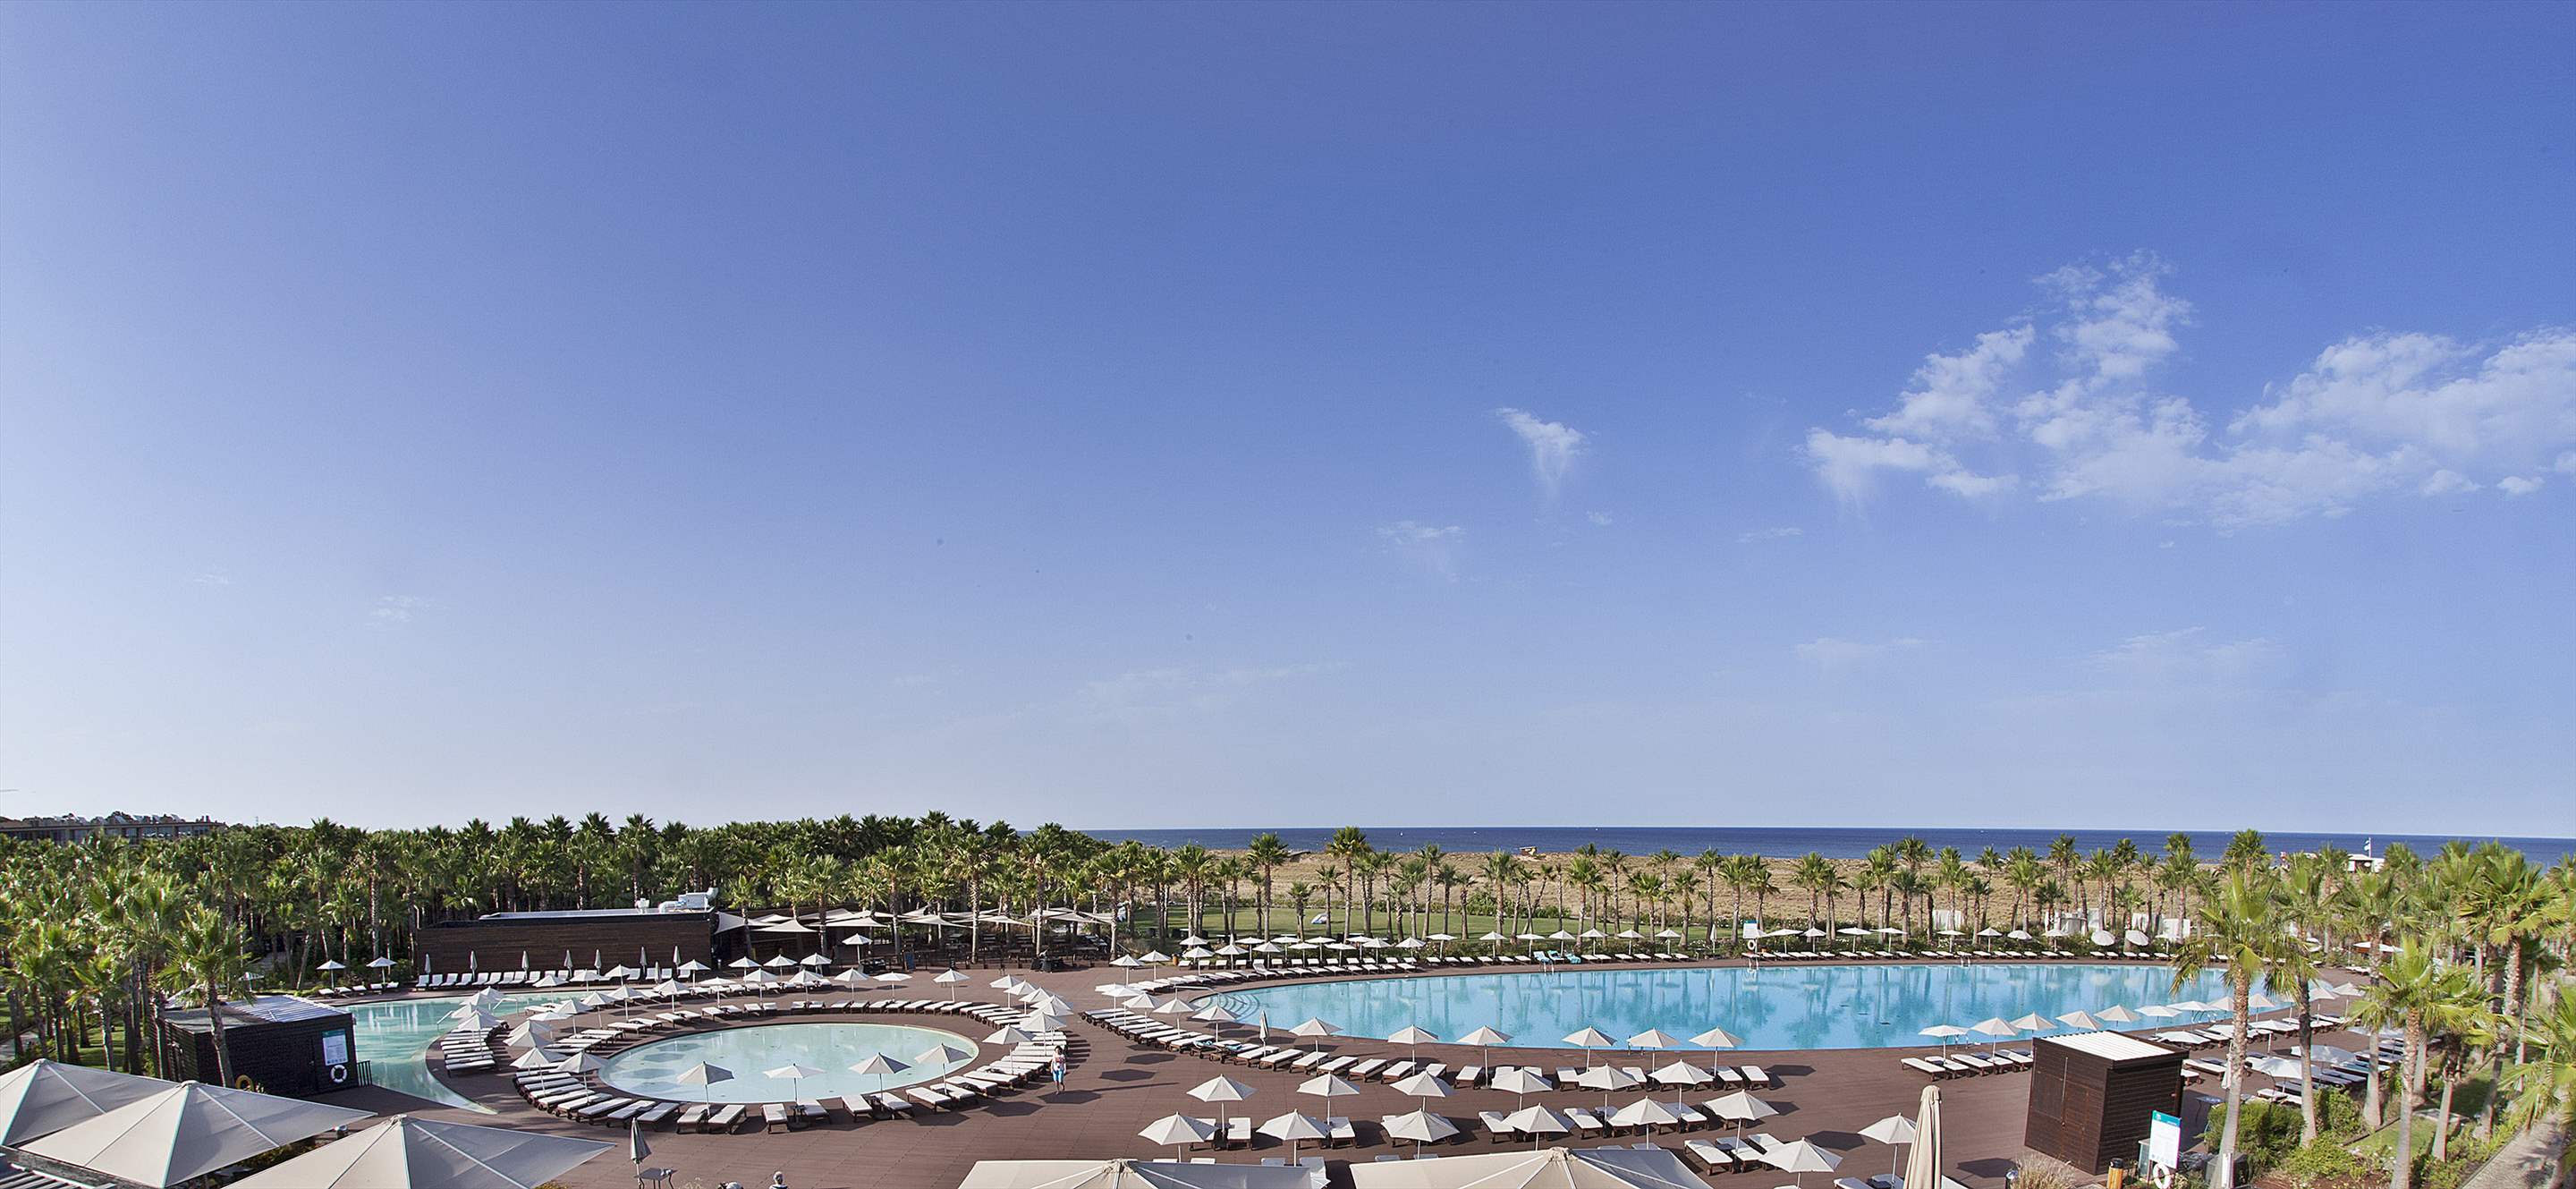 Vidamar Hotel Superior Ocean View Room, HB, Family Room, 1 bedroom hotel in Vidamar Resort, Algarve Photo #32